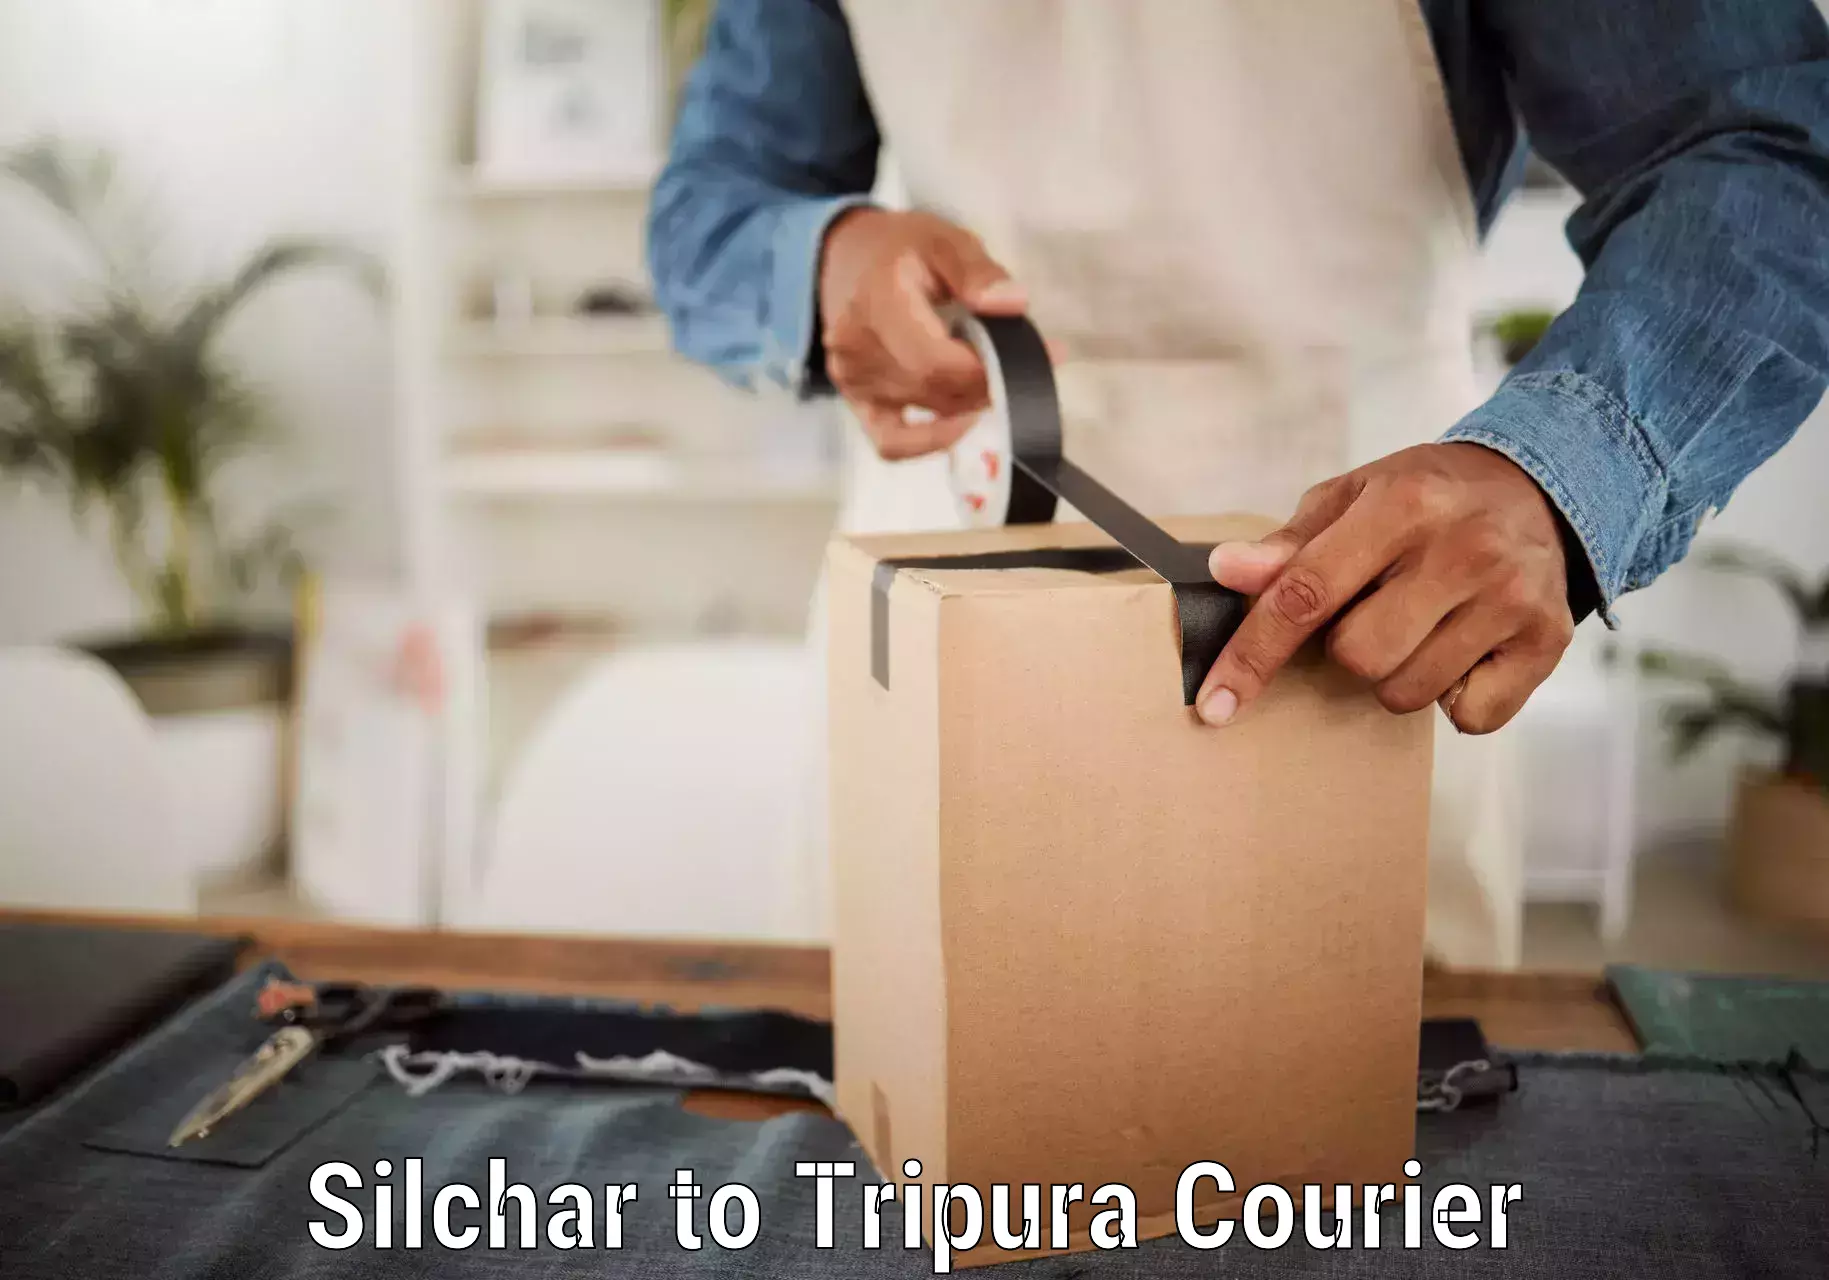 Versatile courier offerings Silchar to Agartala